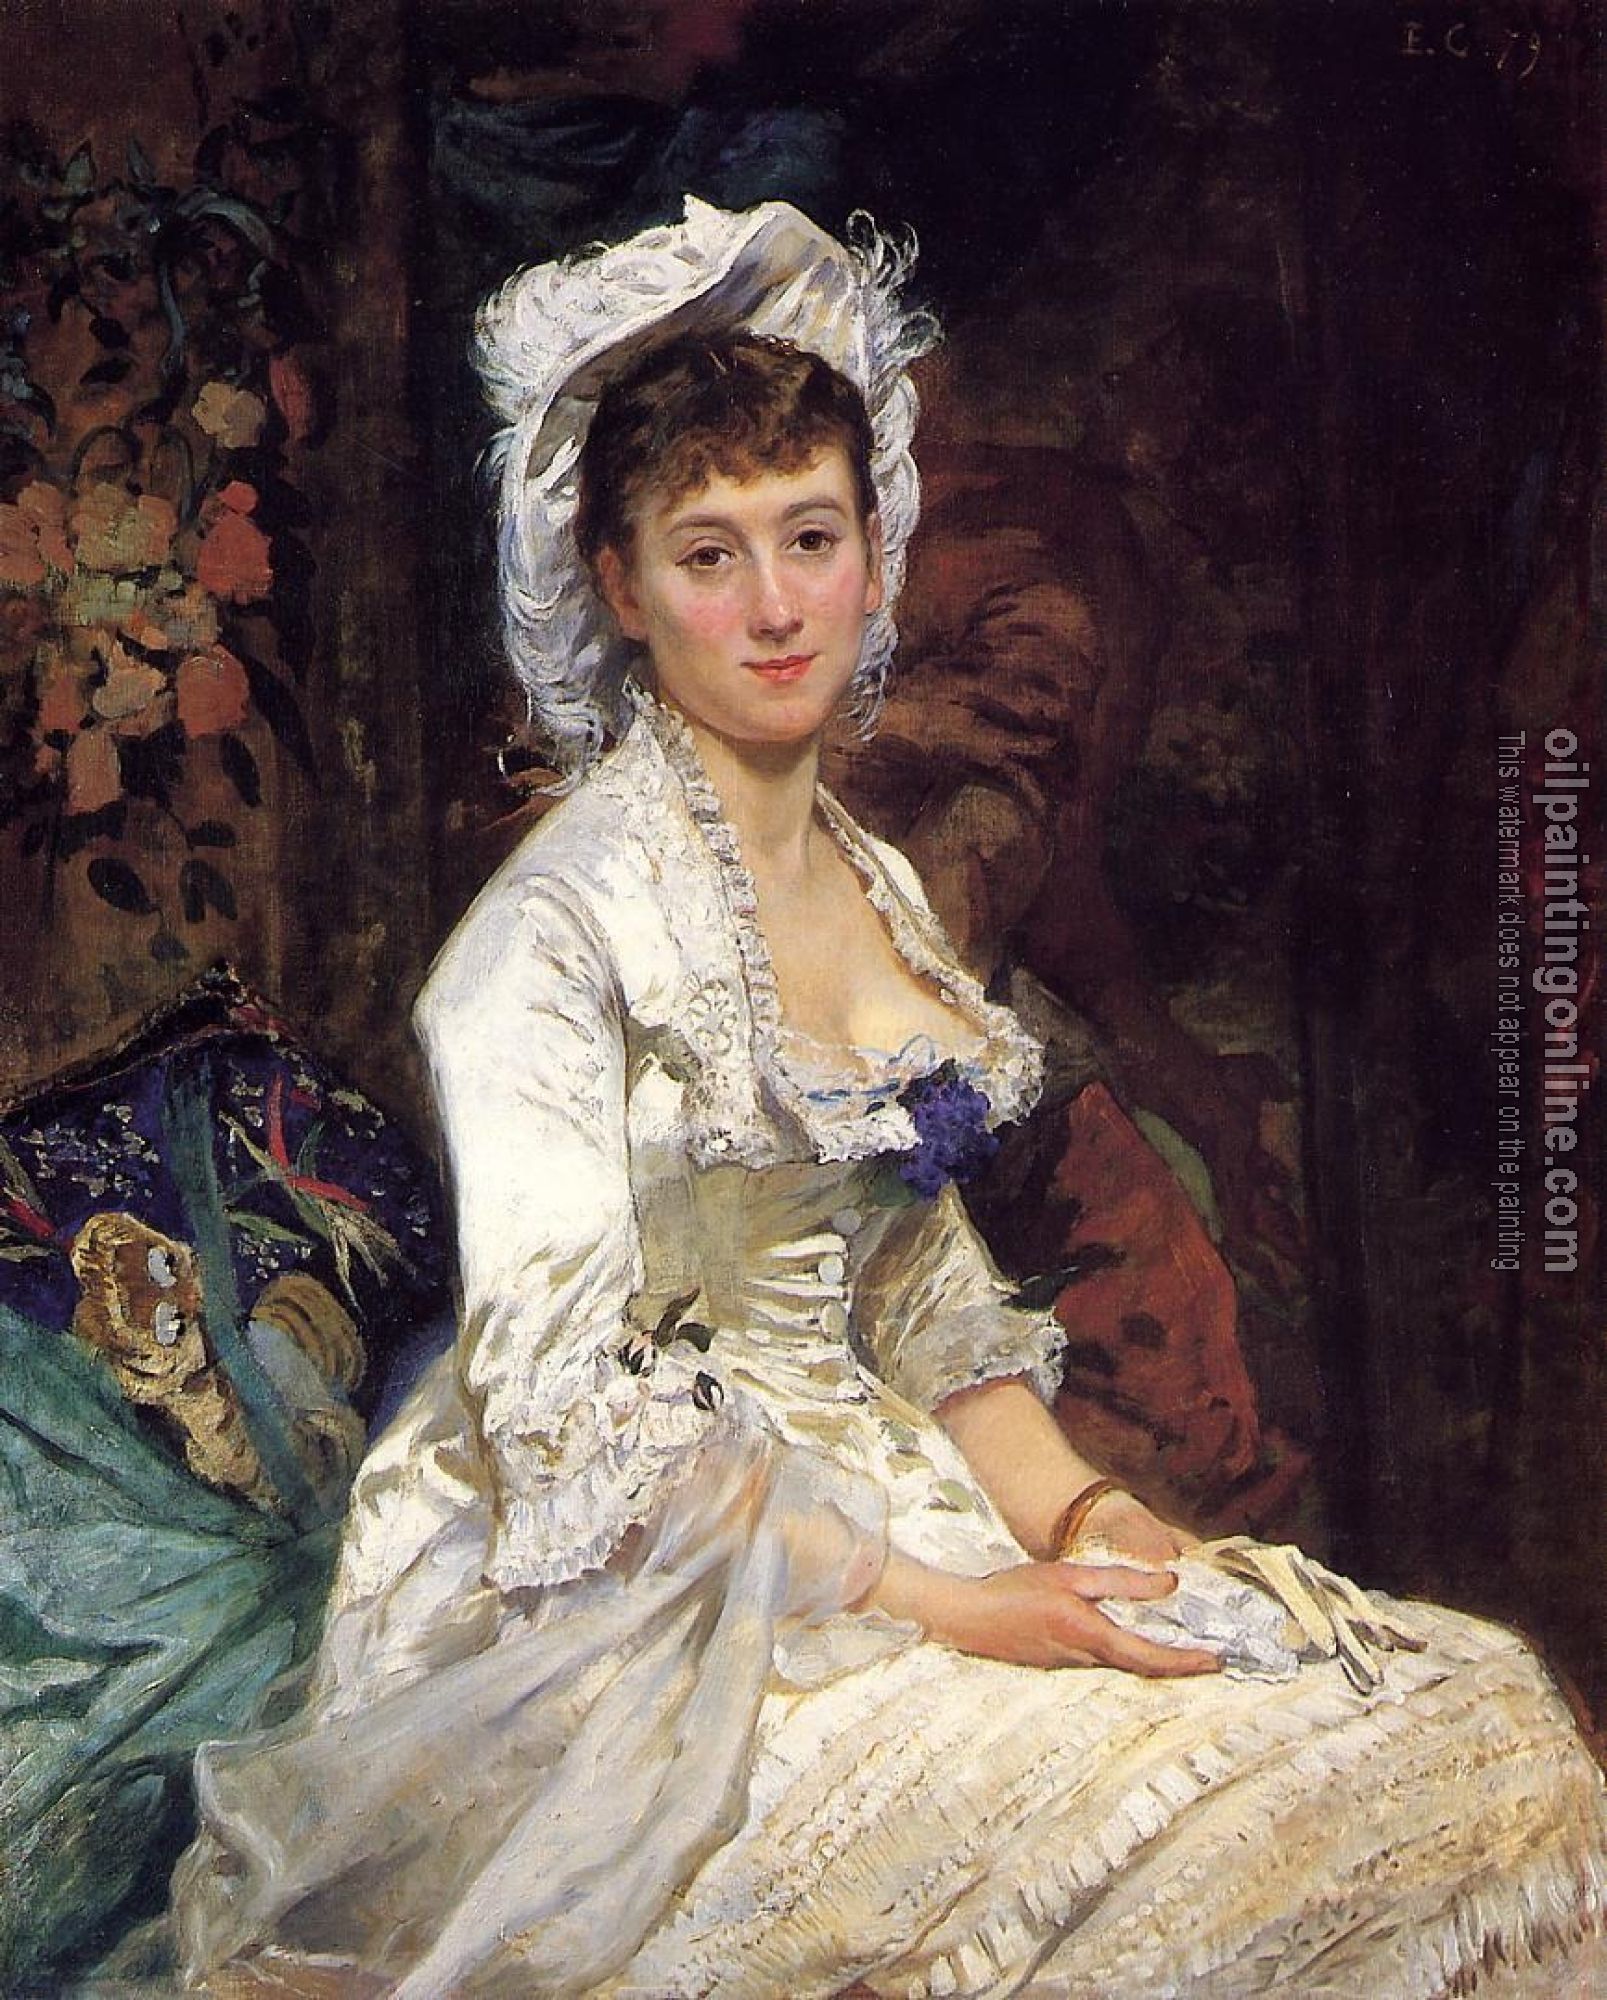 Gonzales, Eva - Portrait of a Woman in White